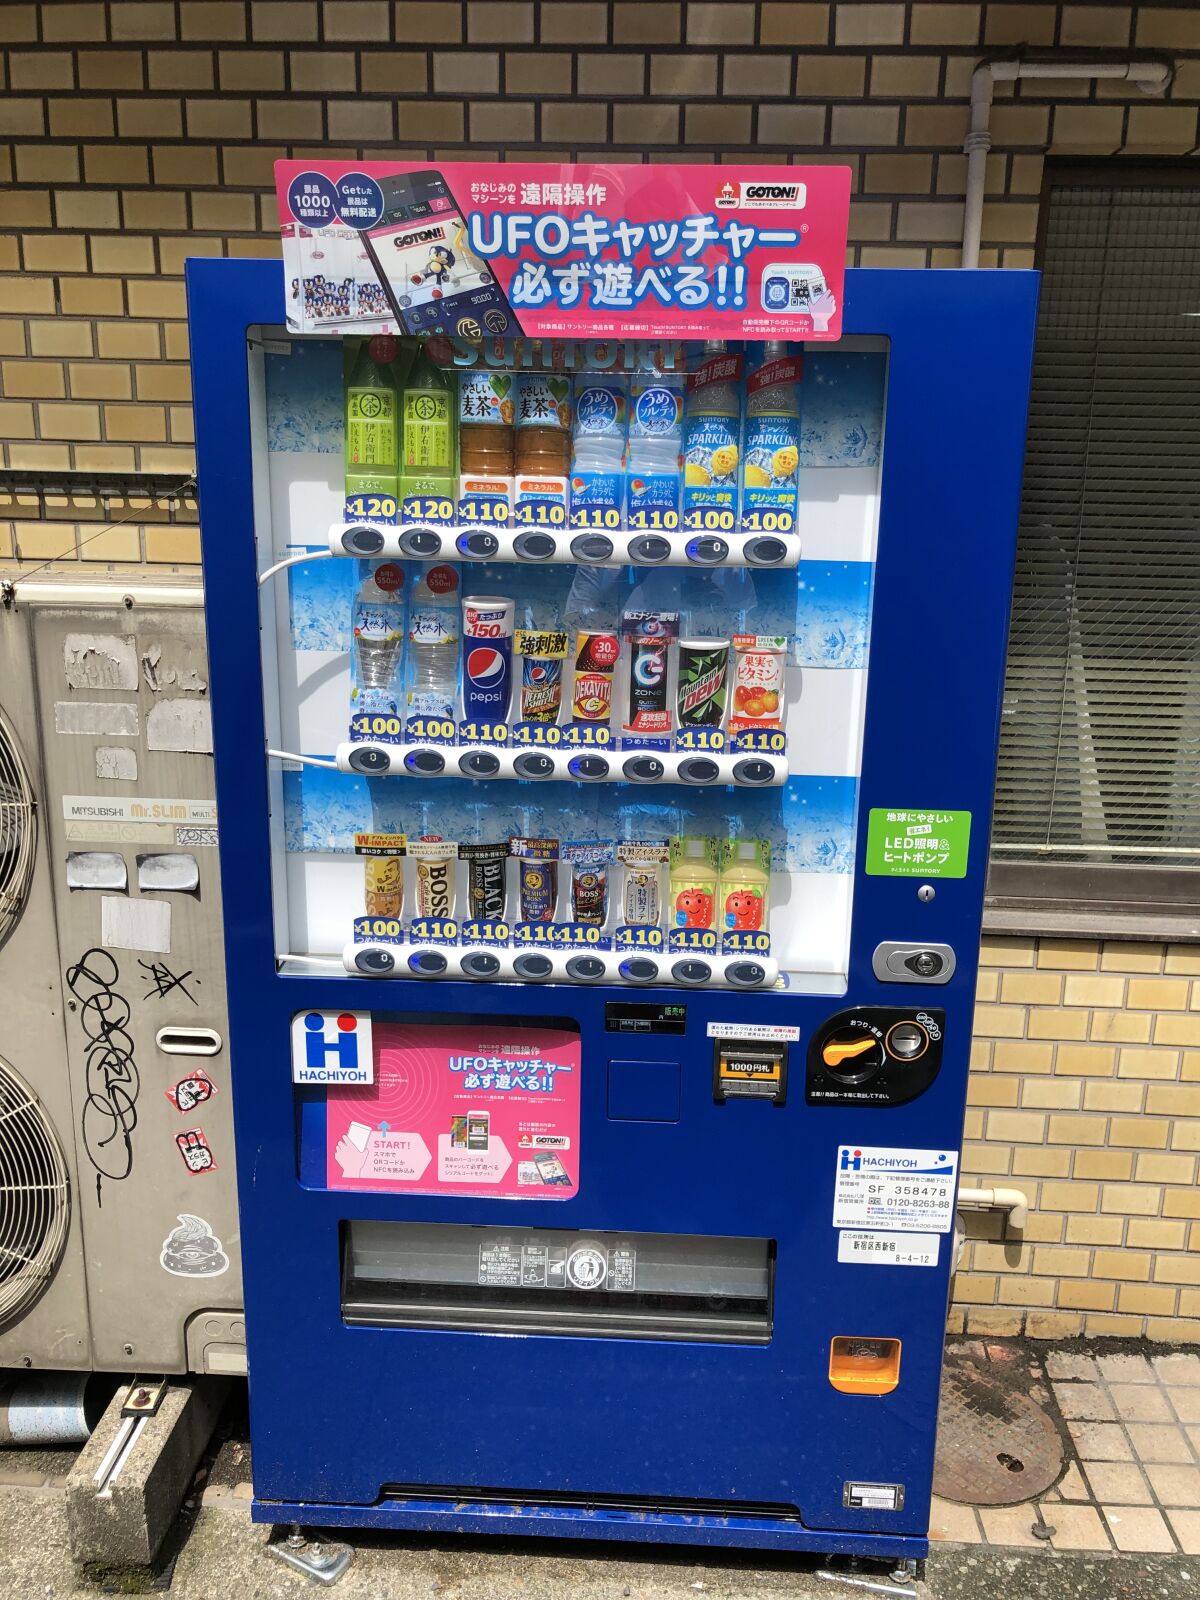 A vending machine on a street